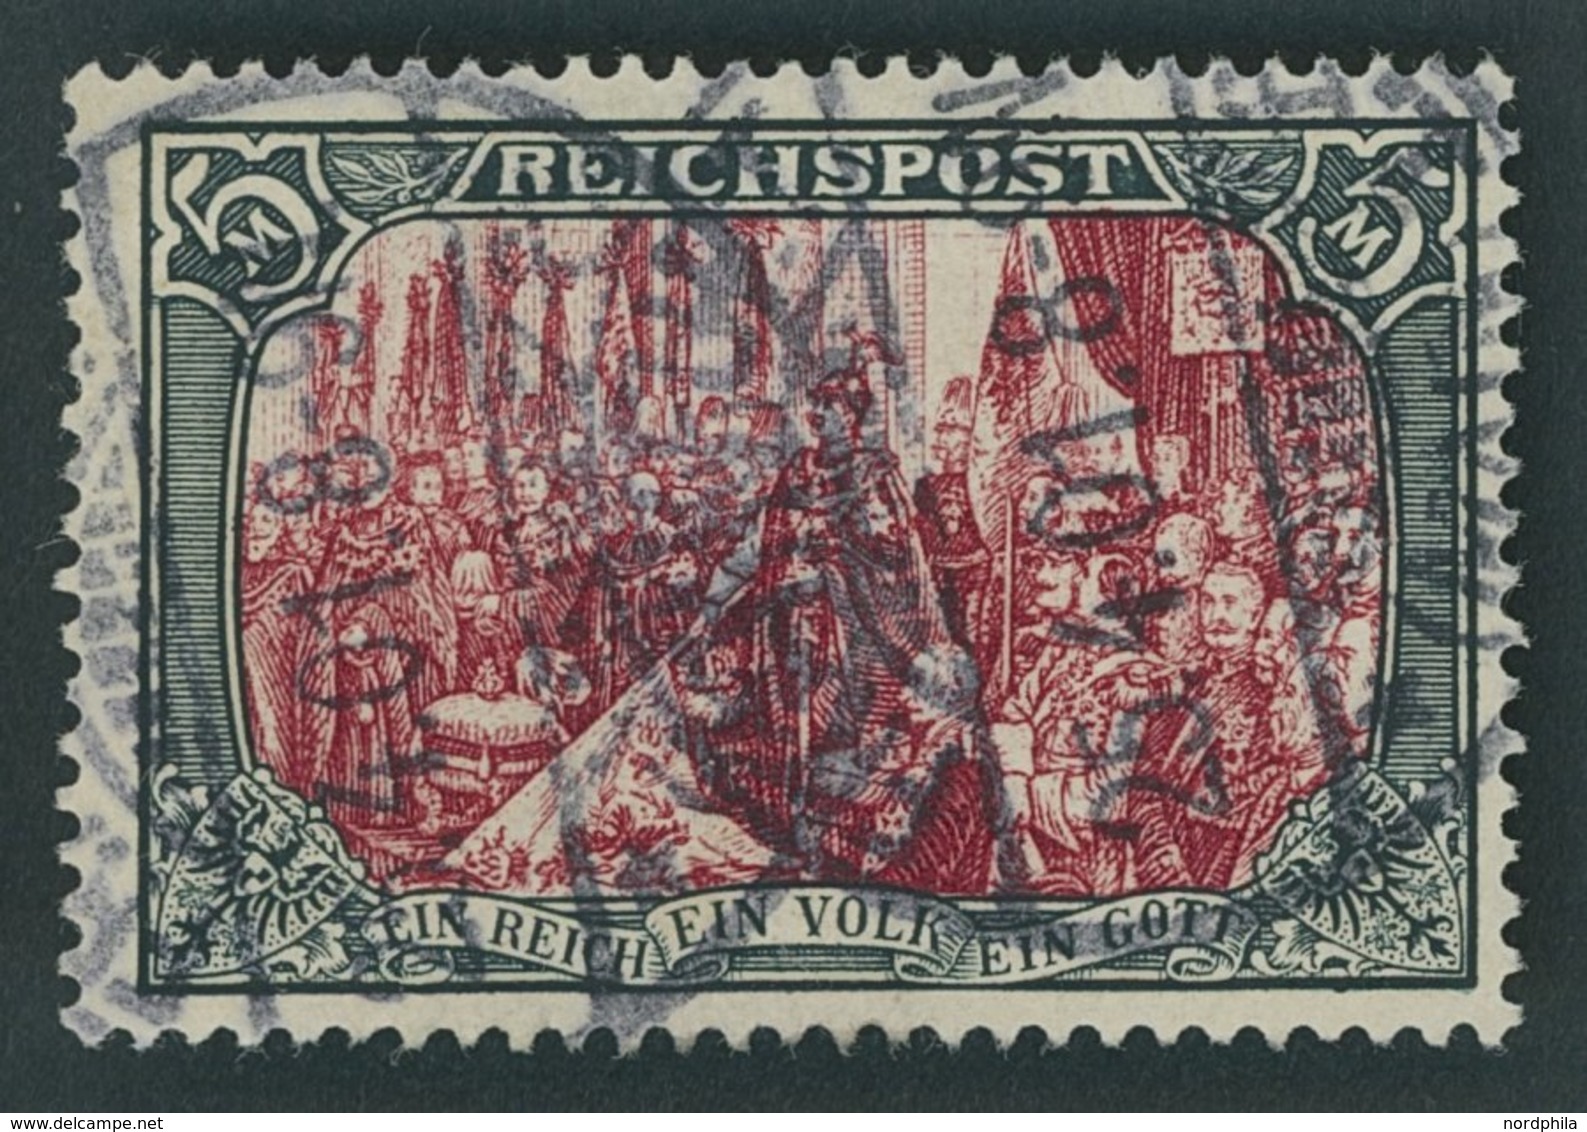 Dt. Reich 66I O, 1900, 5 M. Reichspost, Type I, Pracht, Fotoattest Jäschke-L., Mi. (2800.-) - Used Stamps